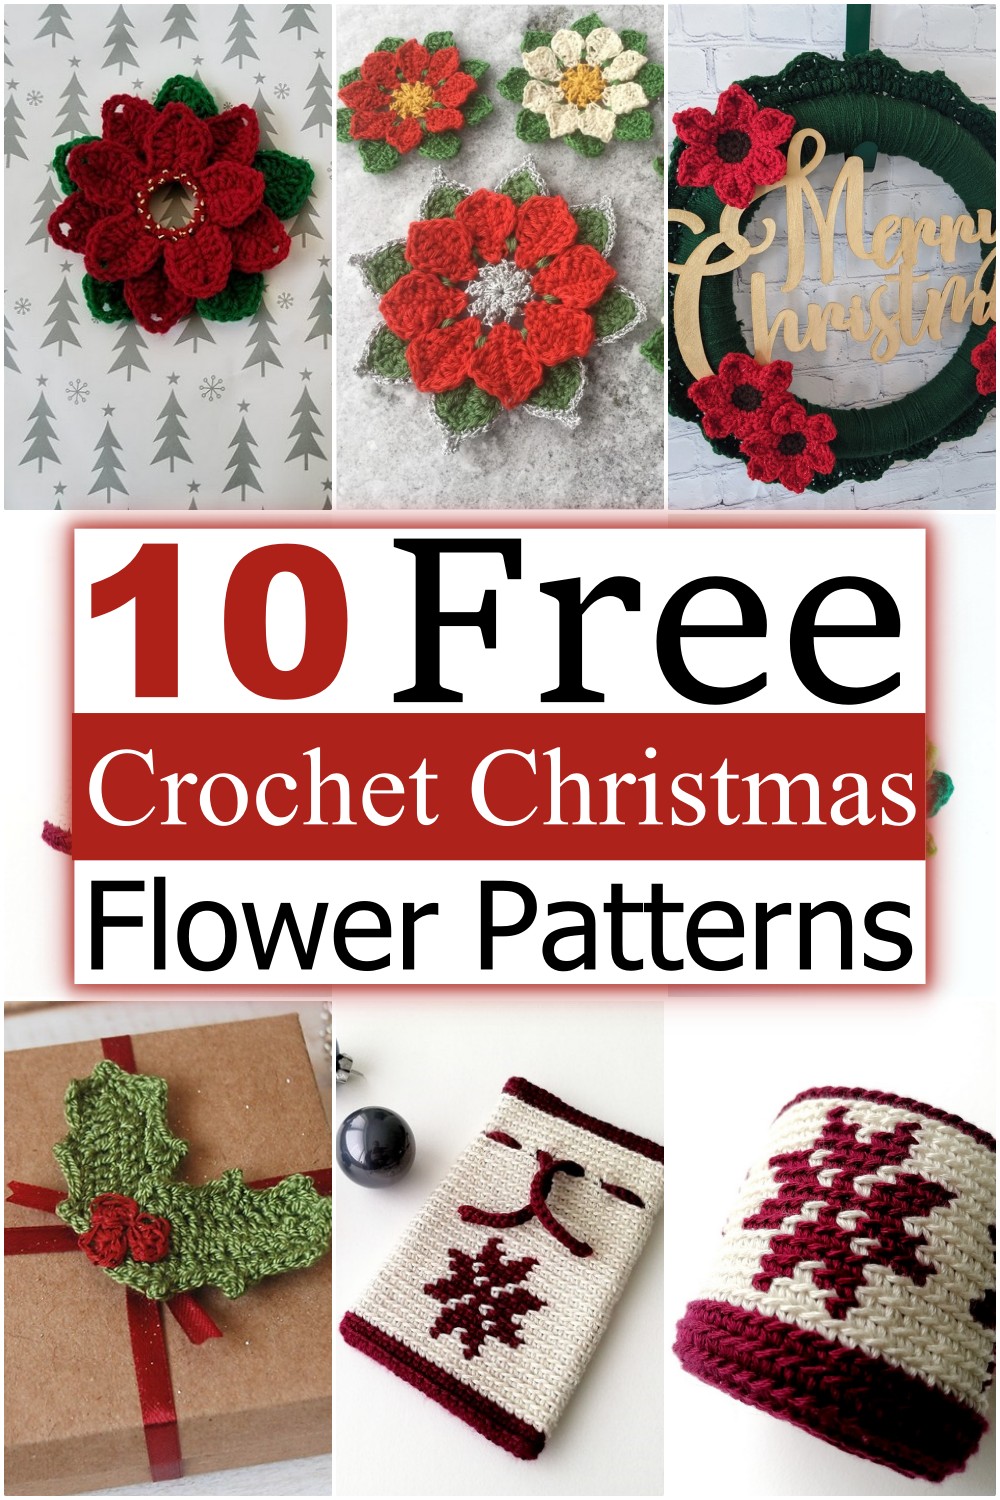 Crochet Christmas Flower Patterns